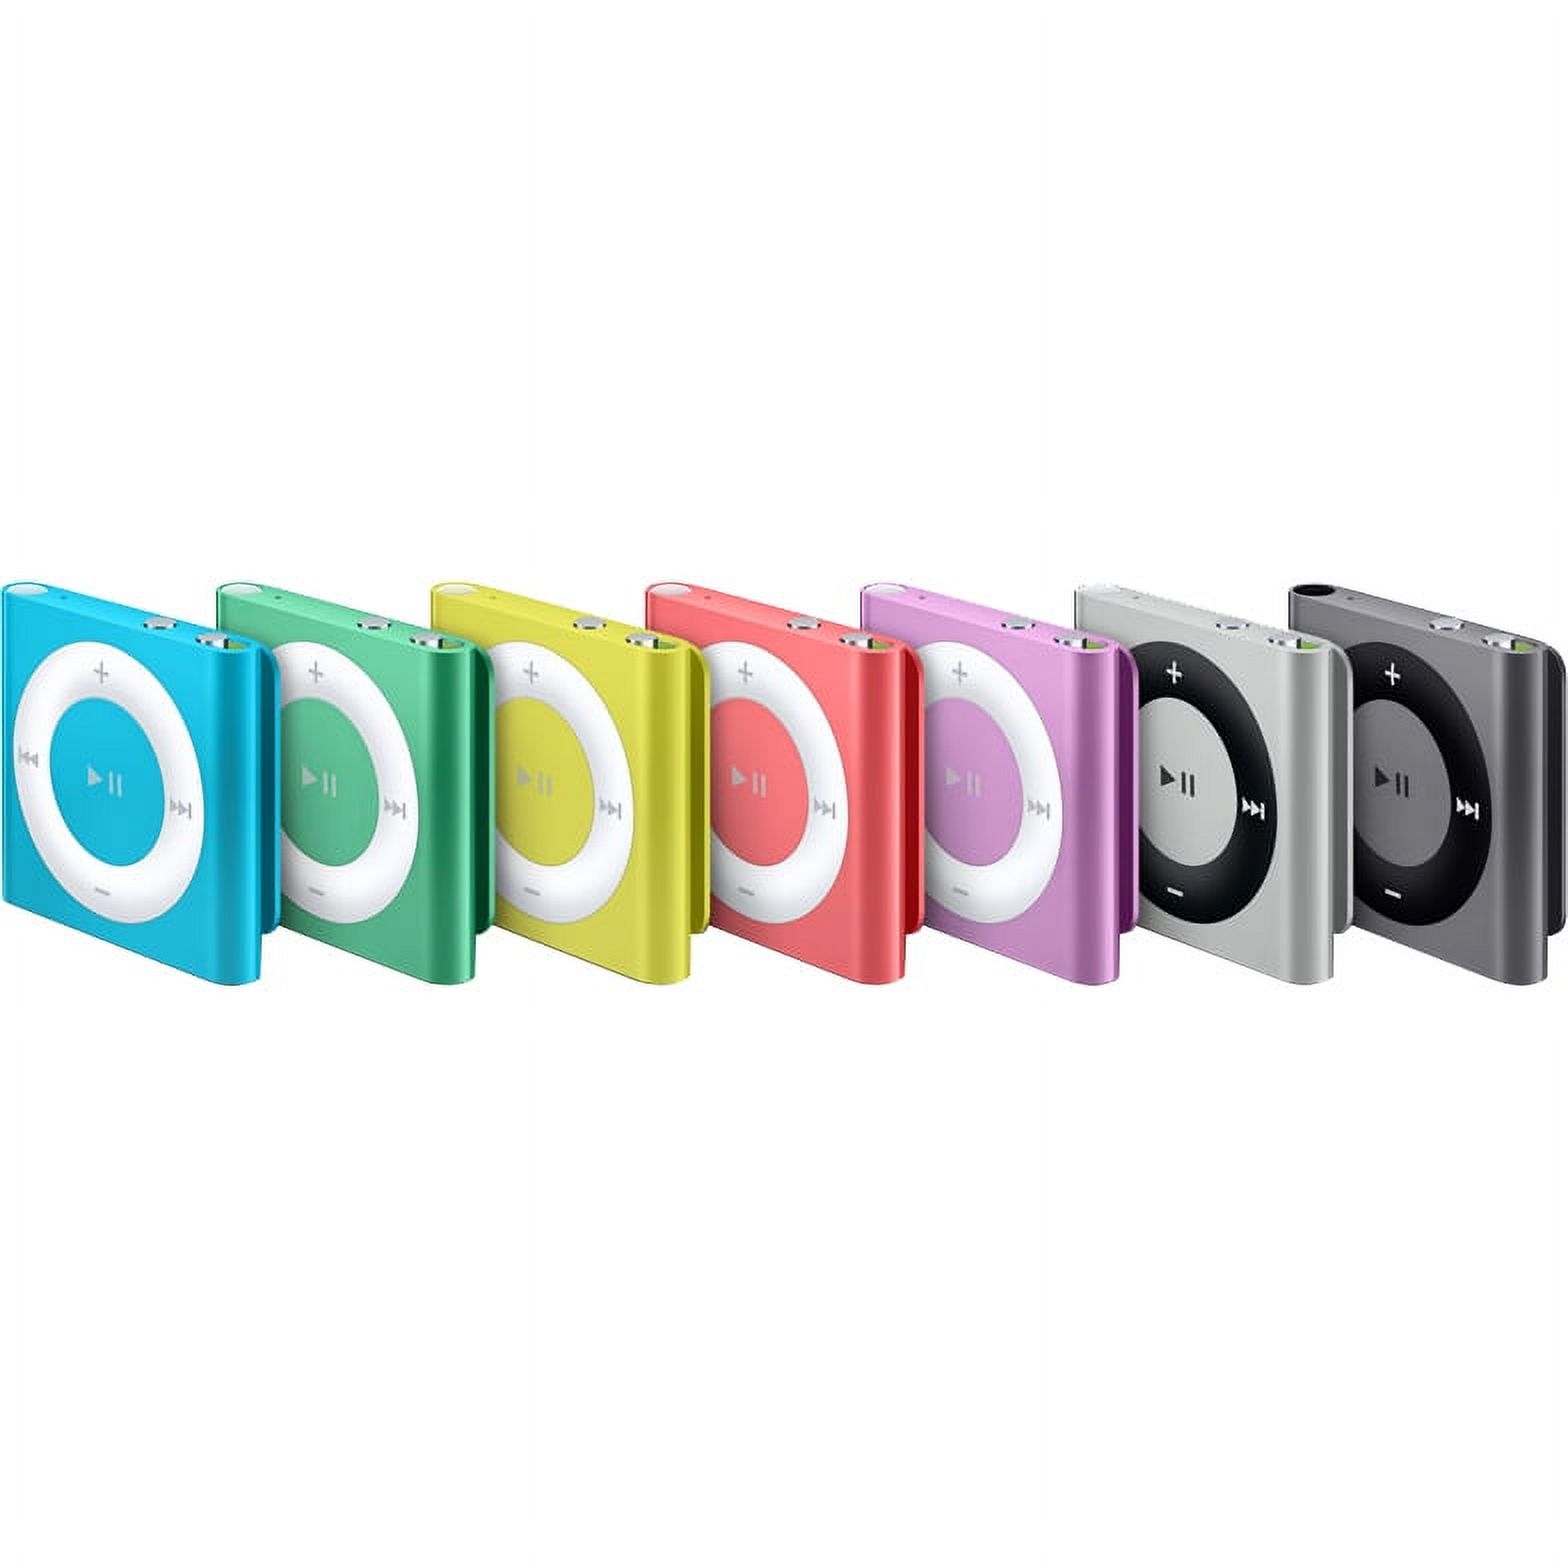 iPod shuffle 4G 2GB Flash MP3 Player - image 2 of 3